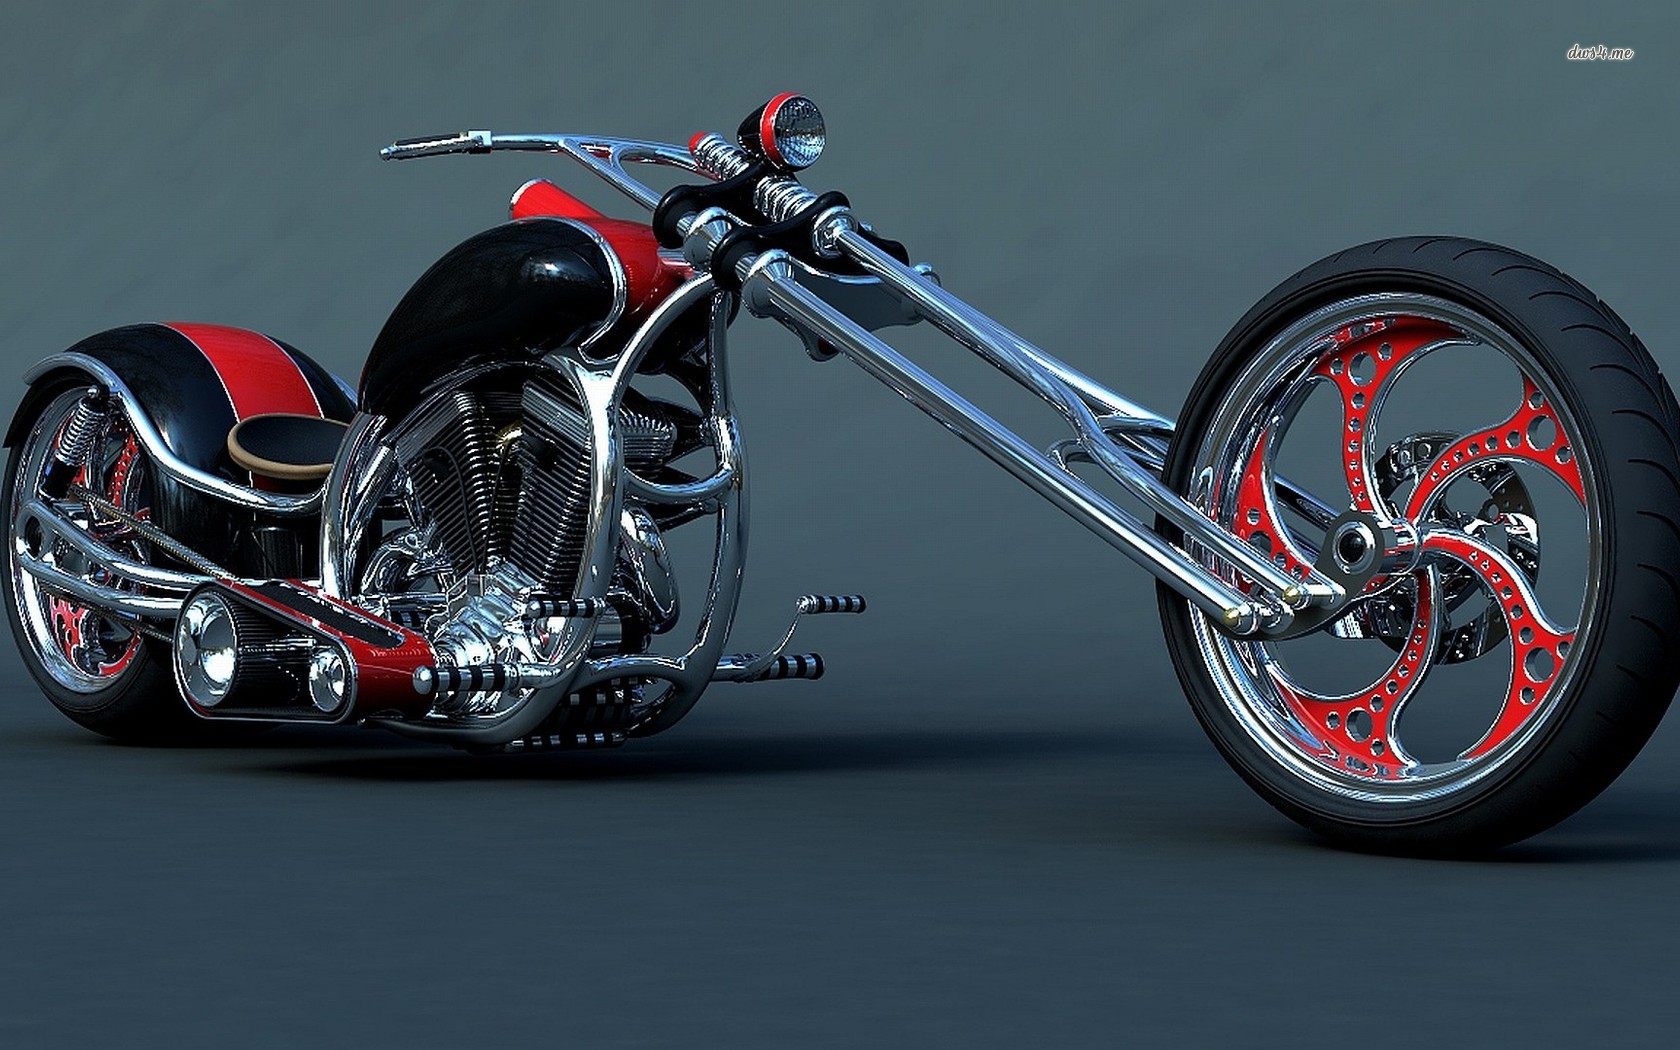 Custom Harley Davidson Motorcycles